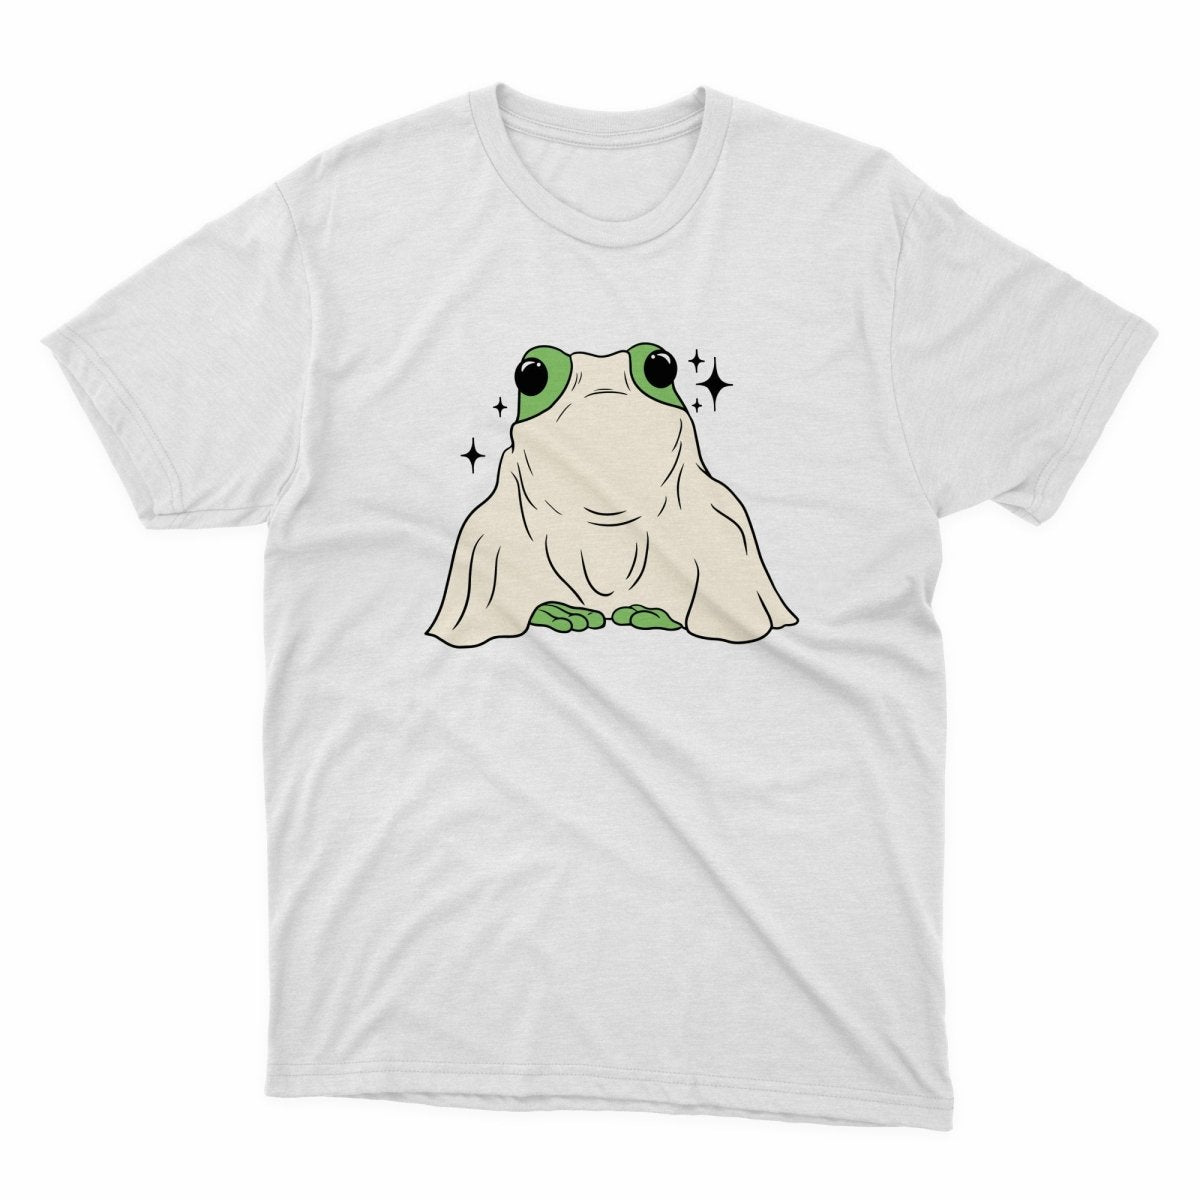 Ghost Frog Shirt - stickerbullGhost Frog ShirtShirtsPrintifystickerbull12818772909411705262WhiteSa white t - shirt with a green frog on it